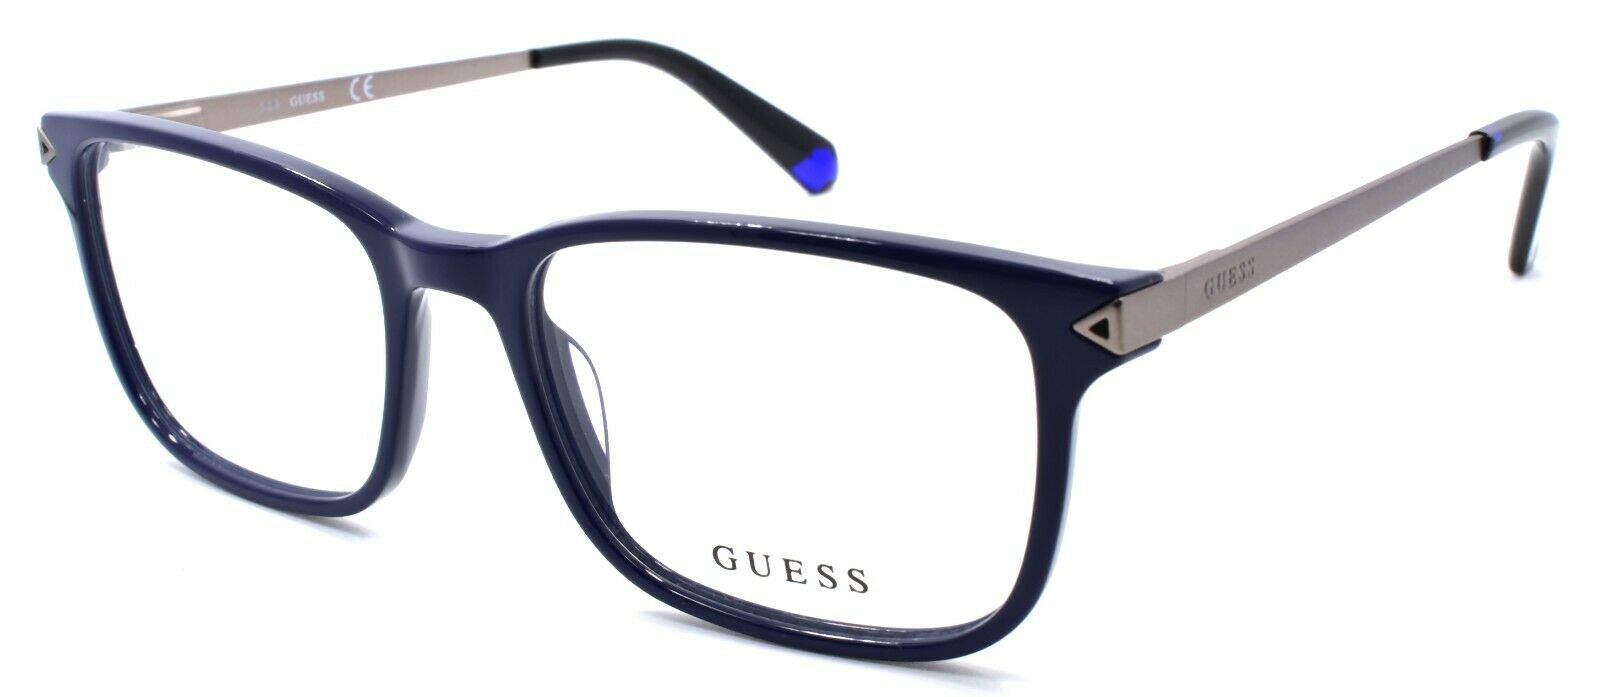 1-GUESS GU1963 092 Men's Eyeglasses Frames 52-17-145 Blue-889214012548-IKSpecs